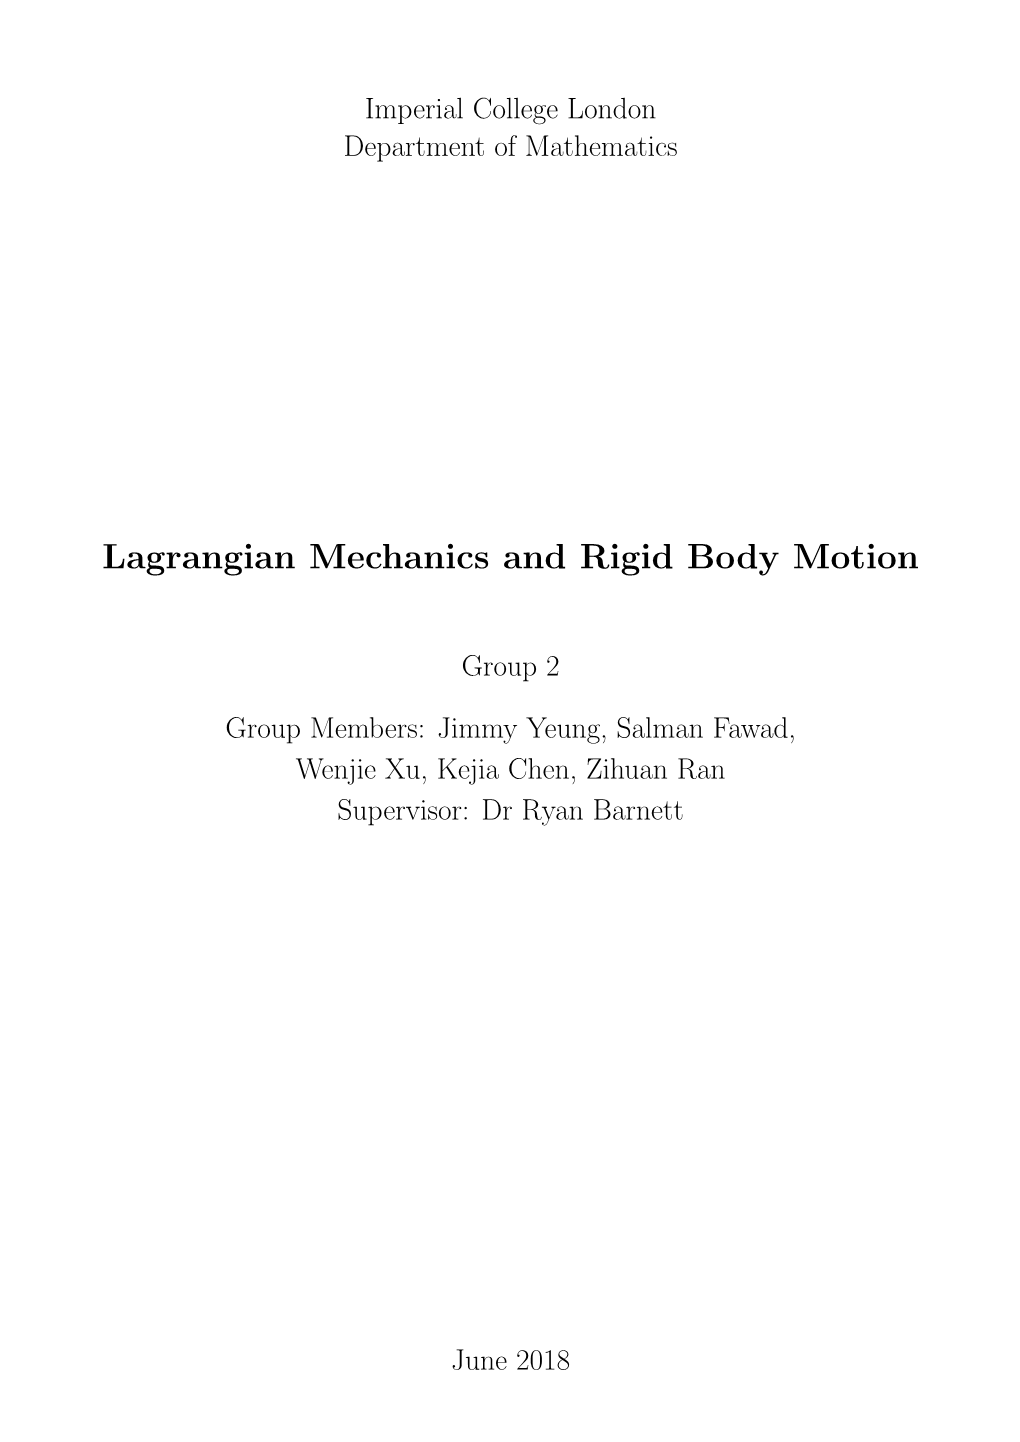 Lagrangian Mechanics and Rigid Body Motion